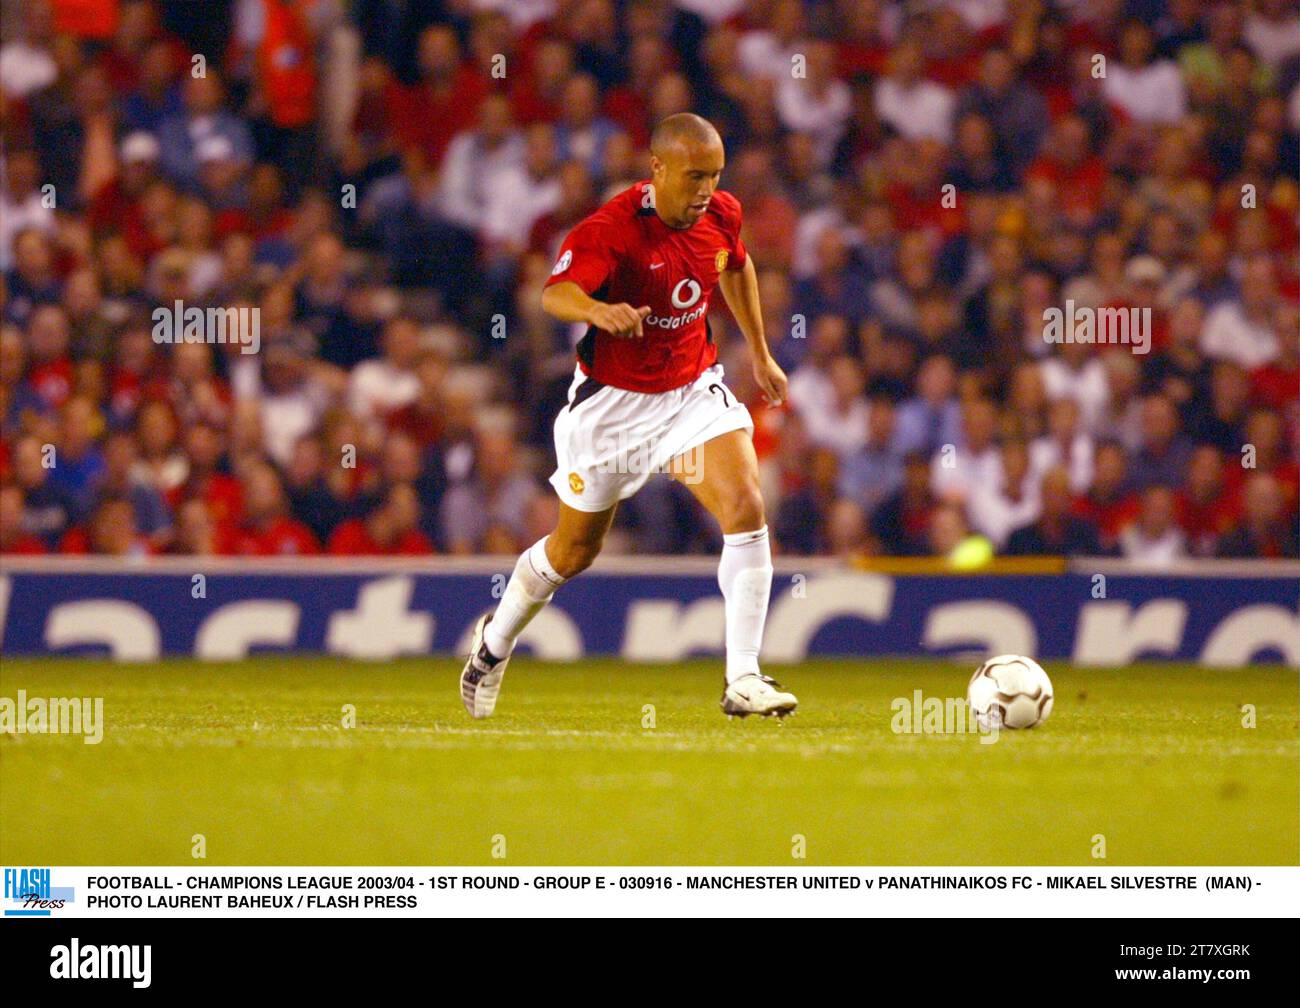 FOOTBALL - CHAMPIONS LEAGUE 2003/04 - 1ST ROUND - GROUP E - 030916 - MANCHESTER UNITED v PANATHINAIKOS FC - MIKAEL SILVESTRE (MAN) - PHOTO LAURENT BAHEUX / FLASH PRESS Stock Photo